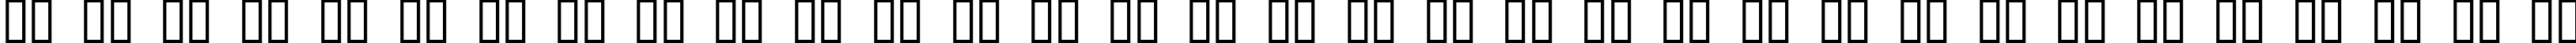 Пример написания русского алфавита шрифтом WP TypographicSymbols